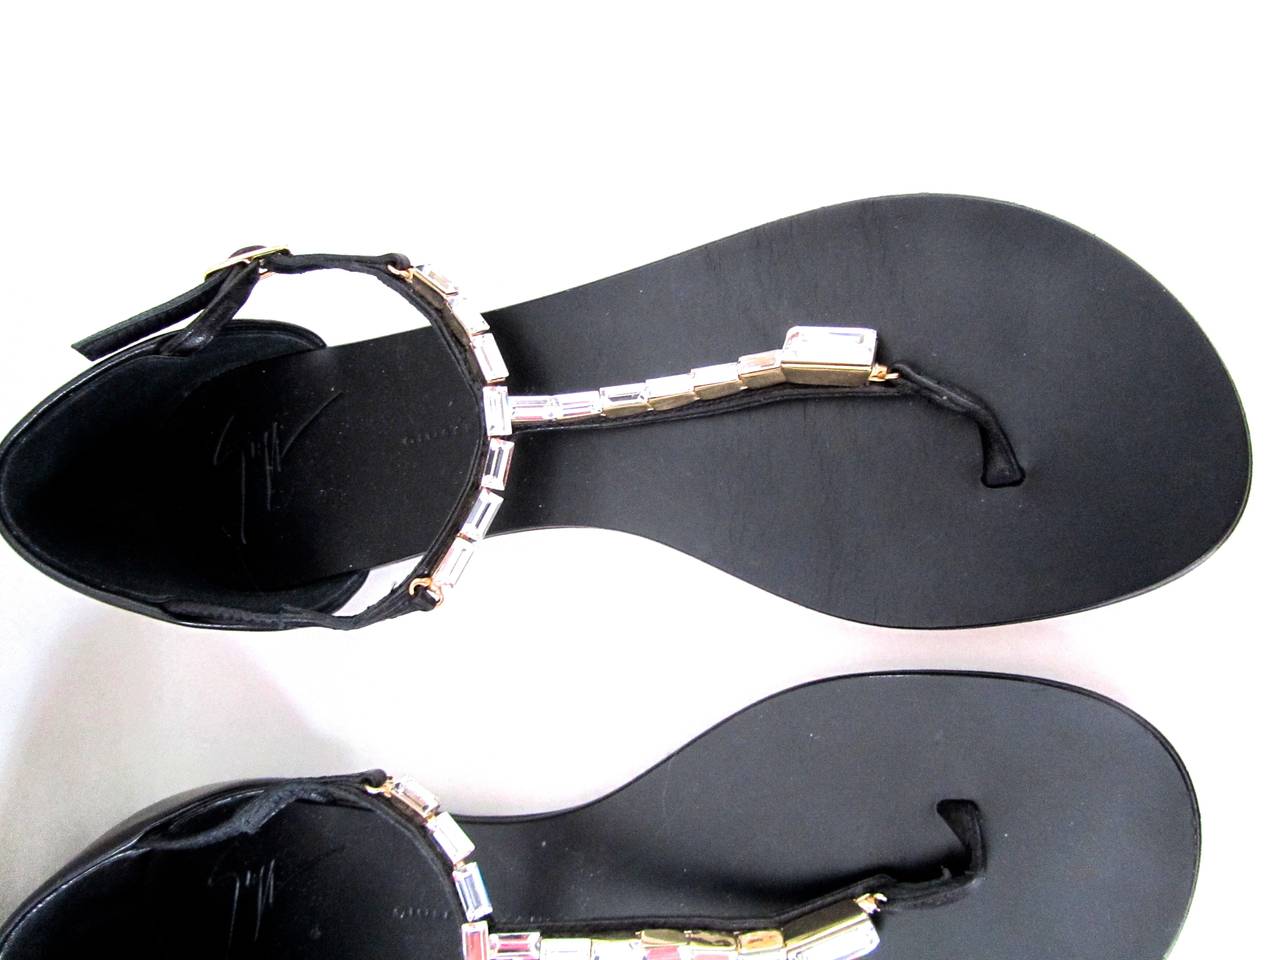 Giuseppe Zanotti Strap Sandals - Size 37 - Black with Rhinestones In Excellent Condition For Sale In Boca Raton, FL